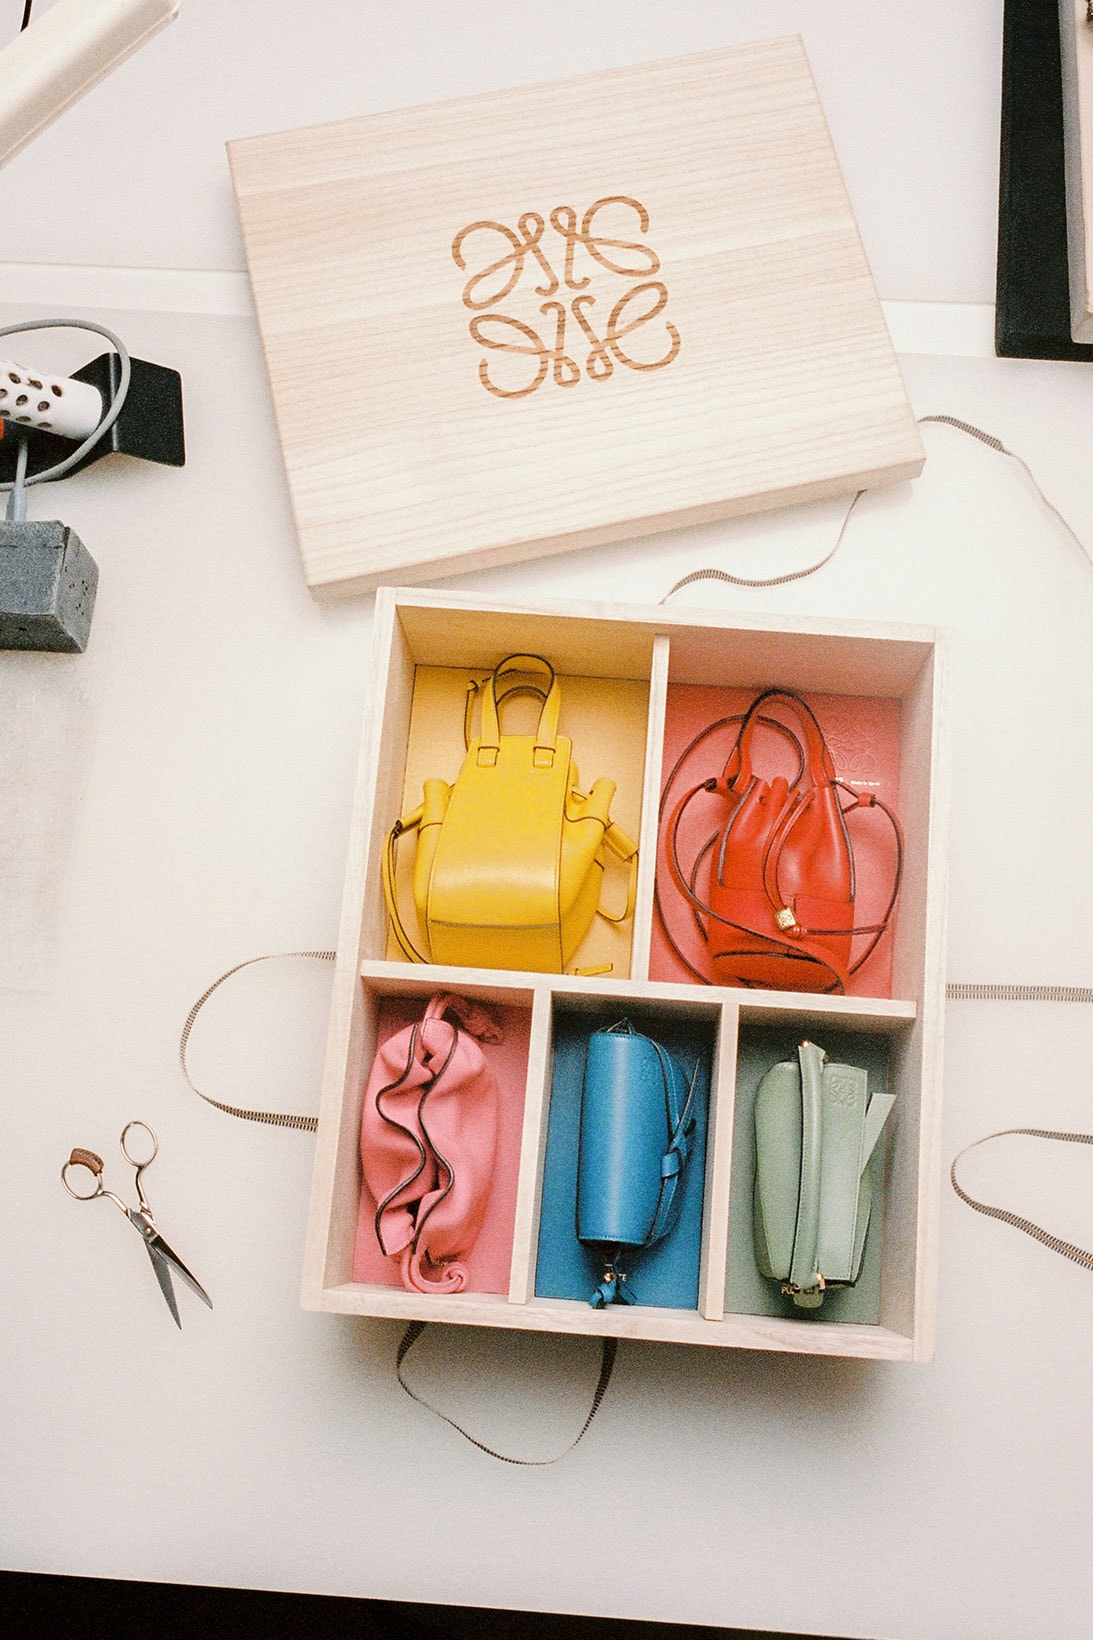 Loewe Launches Nano Bag Collector's Gift Box